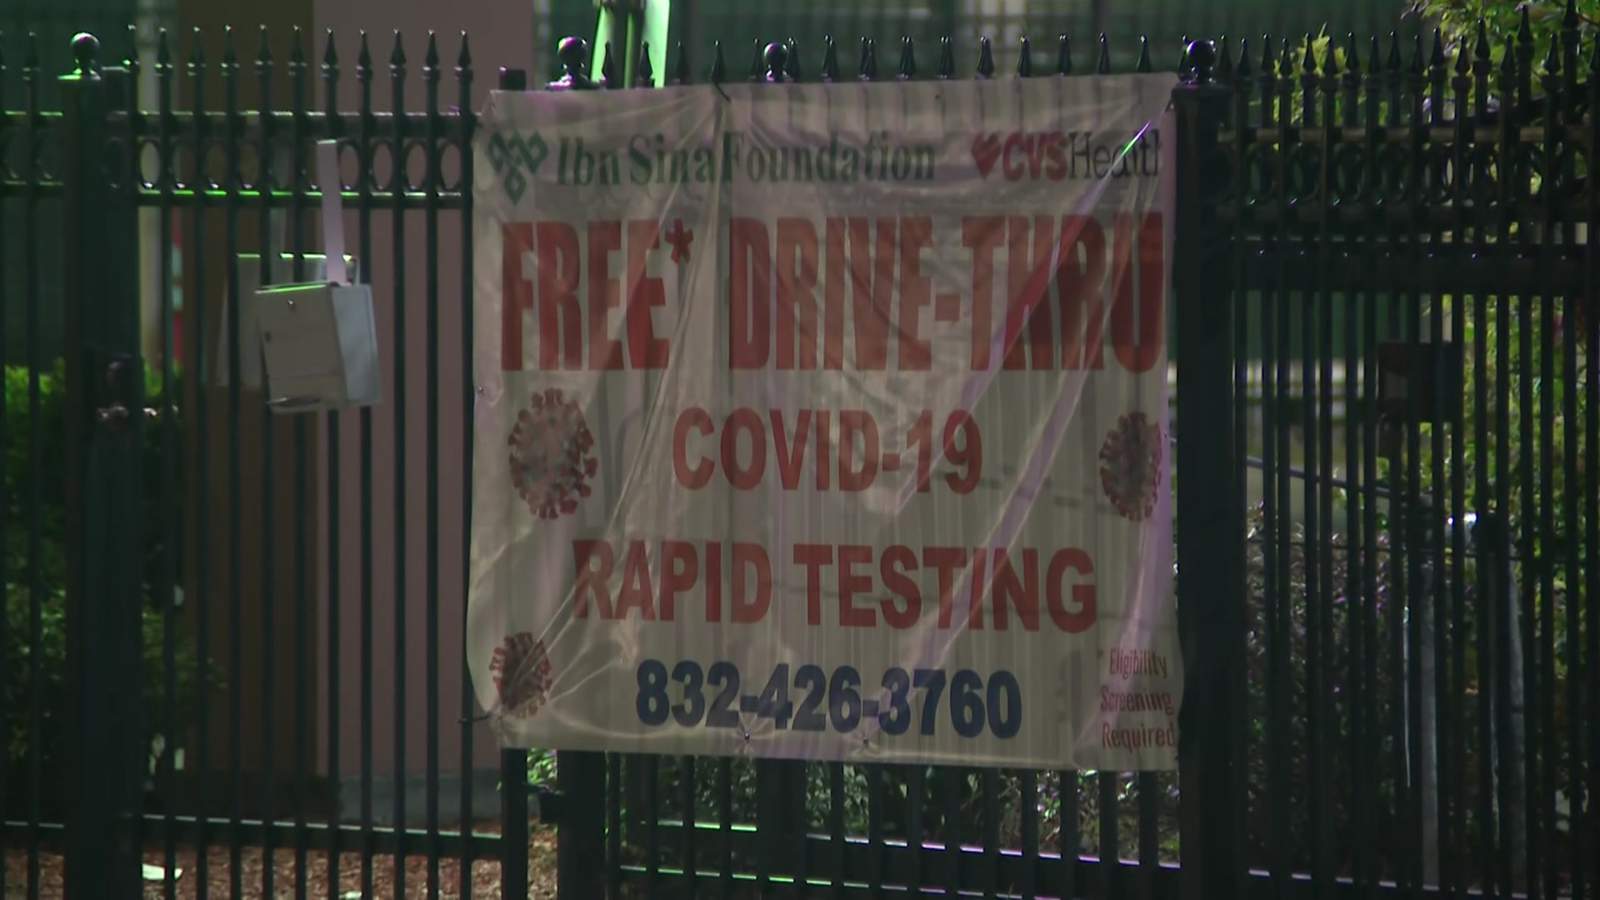 New free rapid coronavirus testing site opening in north Houston